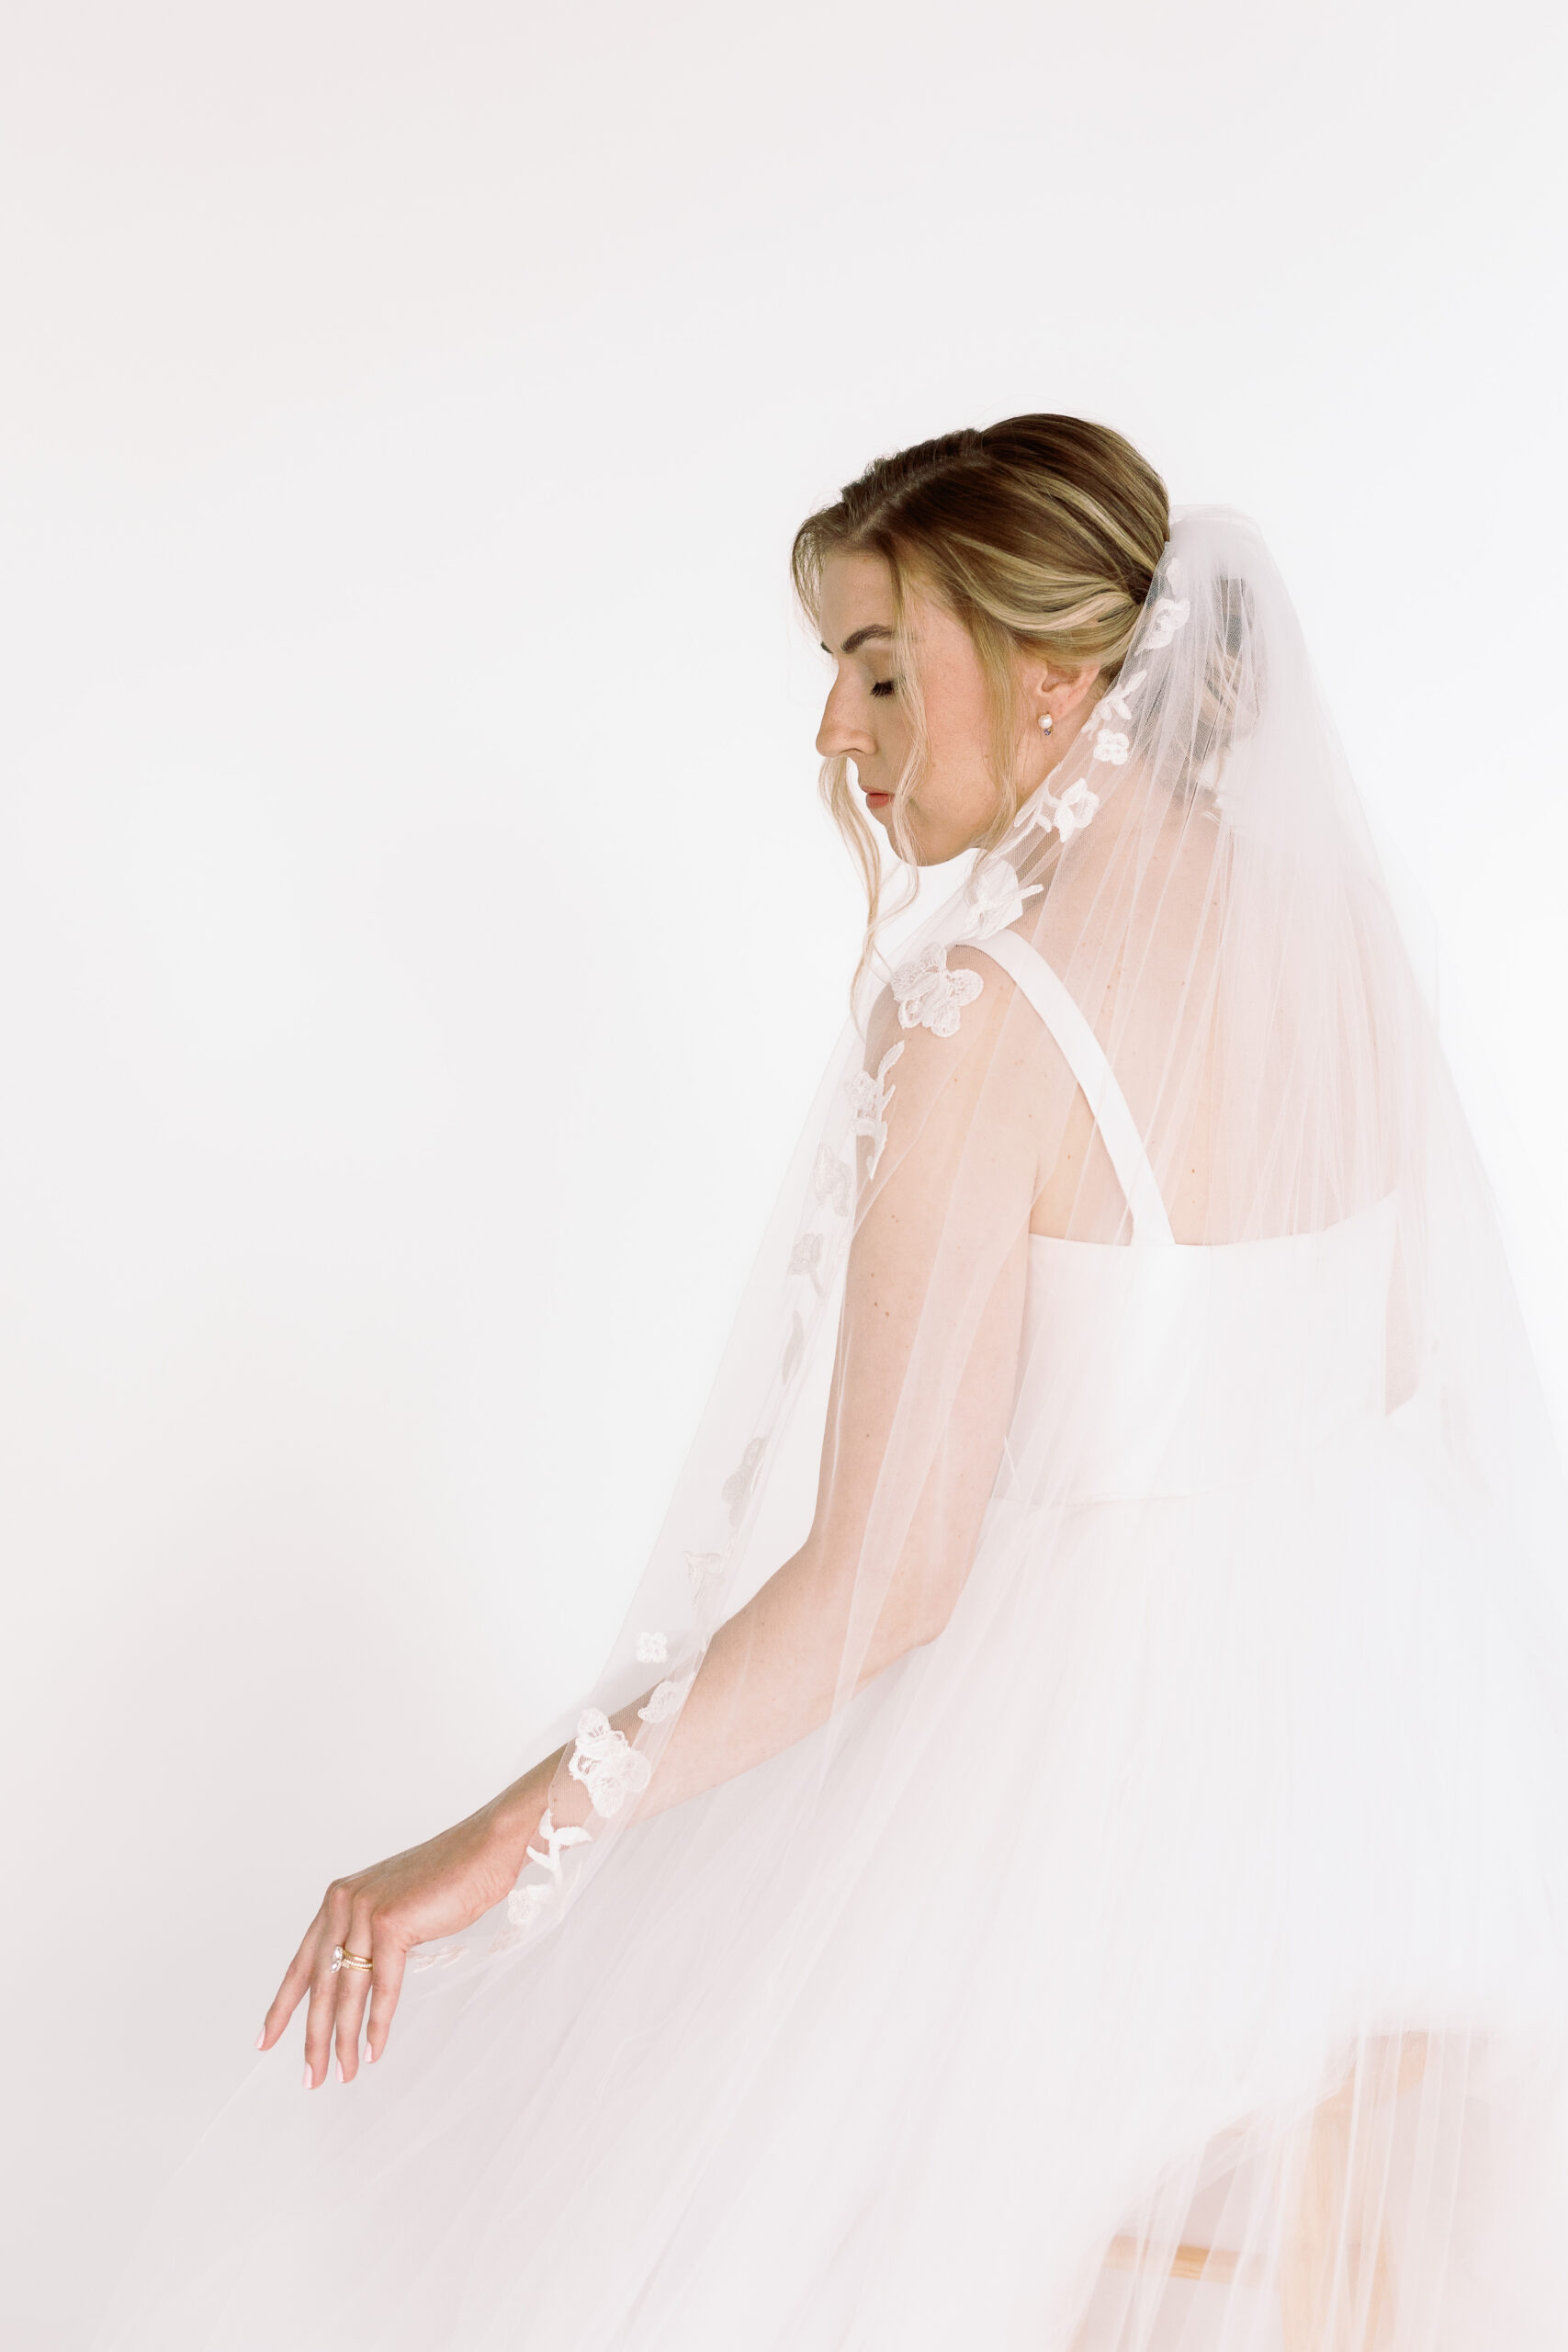 sarah kolis couture gown cathedral veil